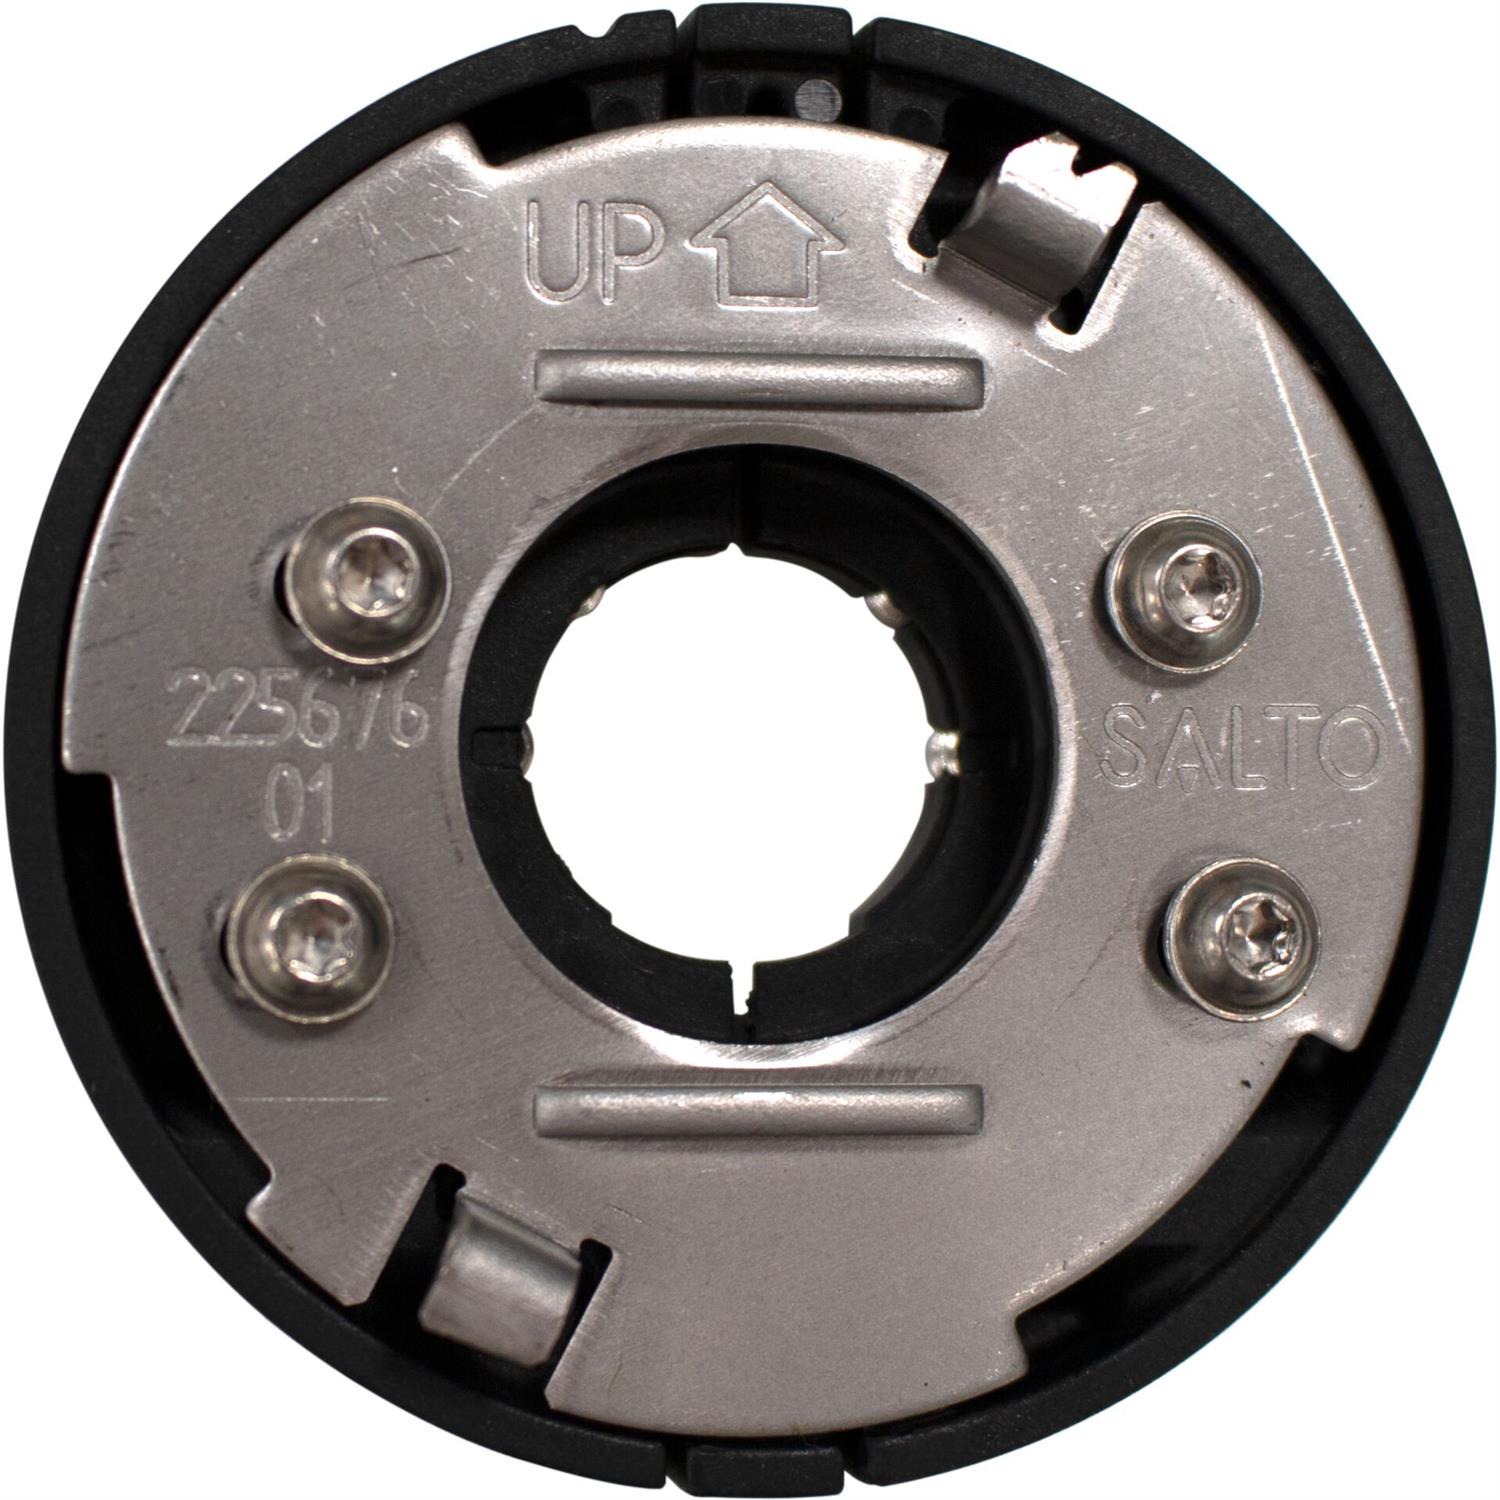 SALTO Key Turner Adapter für Euro profile mecanical cylinders